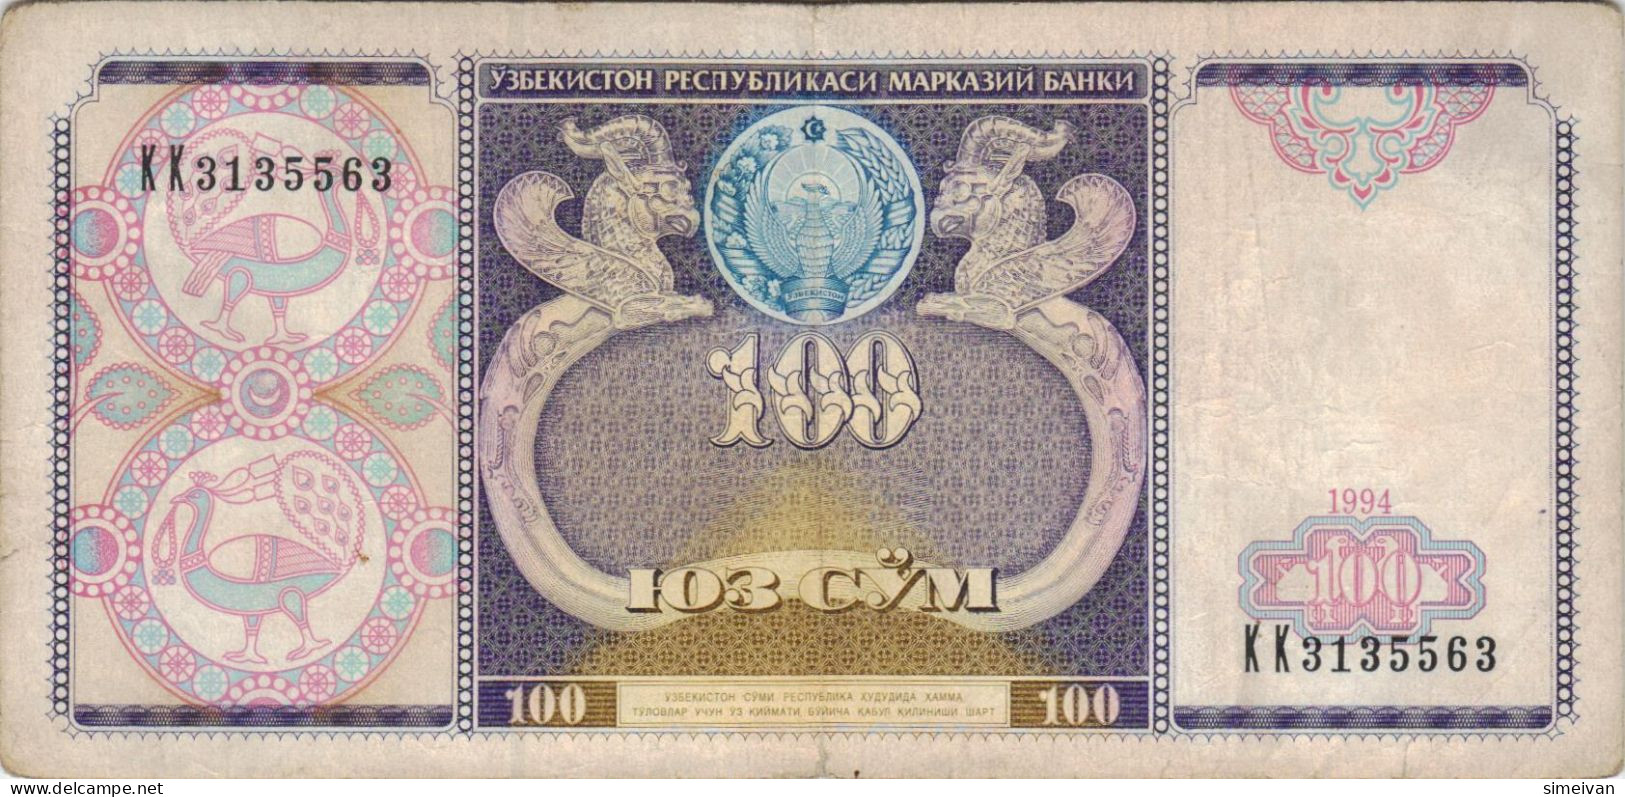 Uzbekistan 100 Sum 1994 P-79a Banknote Asia Currency Ouzbékistan Usbekistan #5336 - Oezbekistan